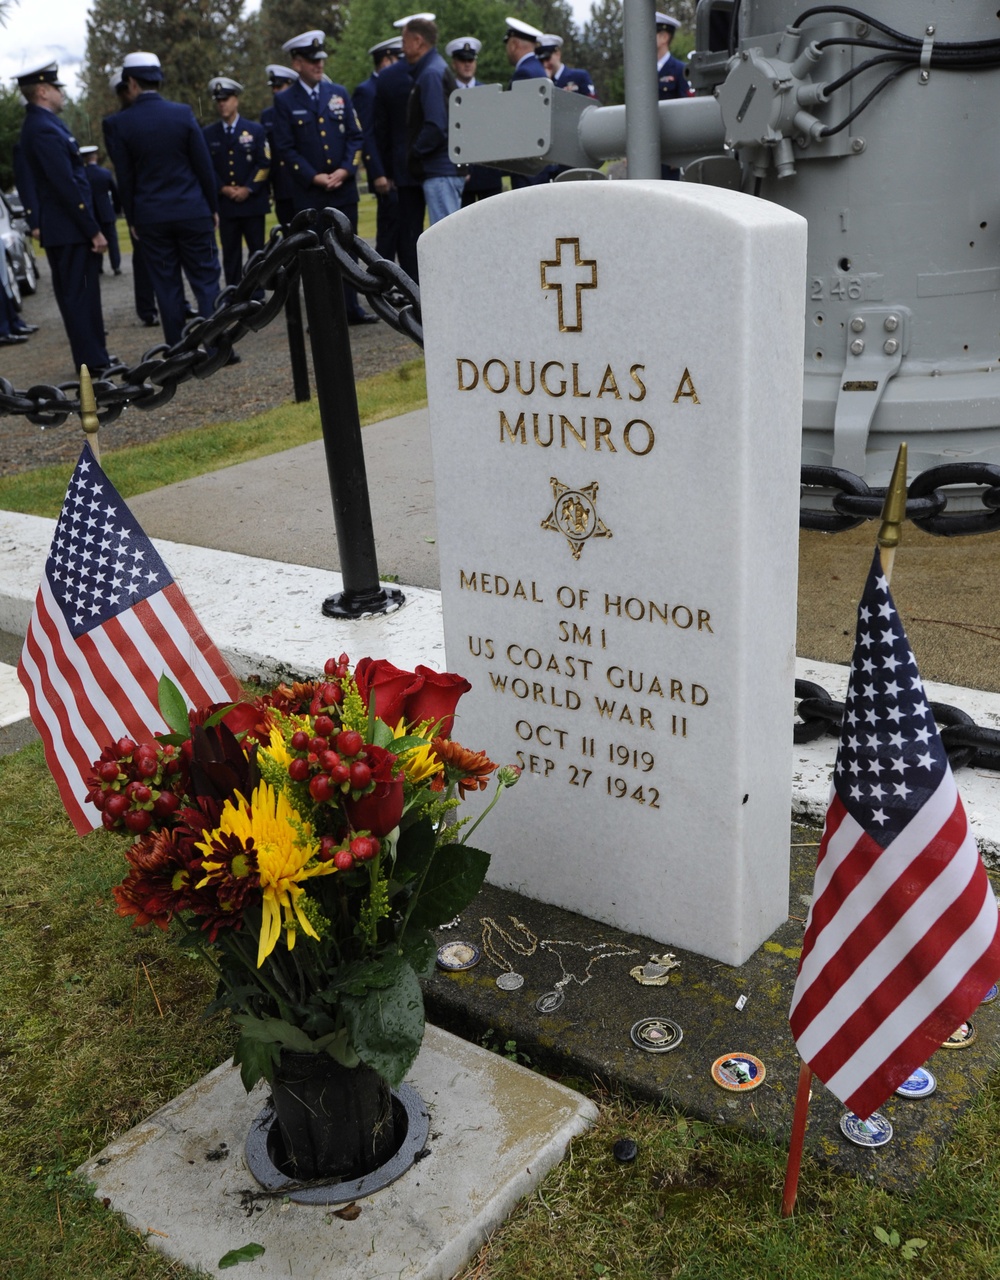 Douglas Munro memorial ceremony